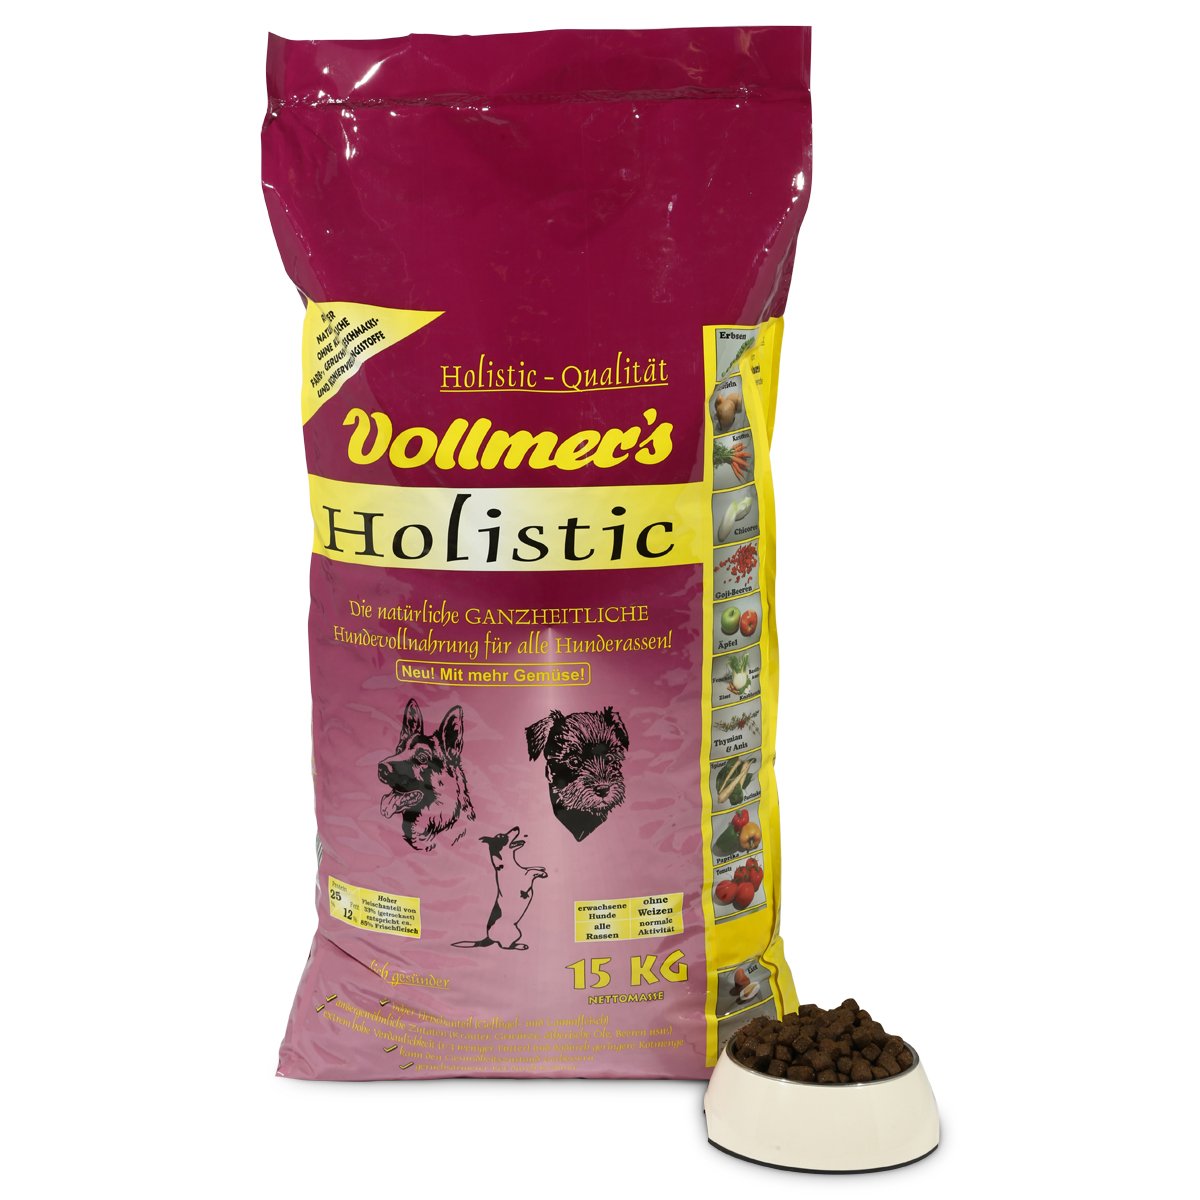 Vollmer's Holistic 15 kg